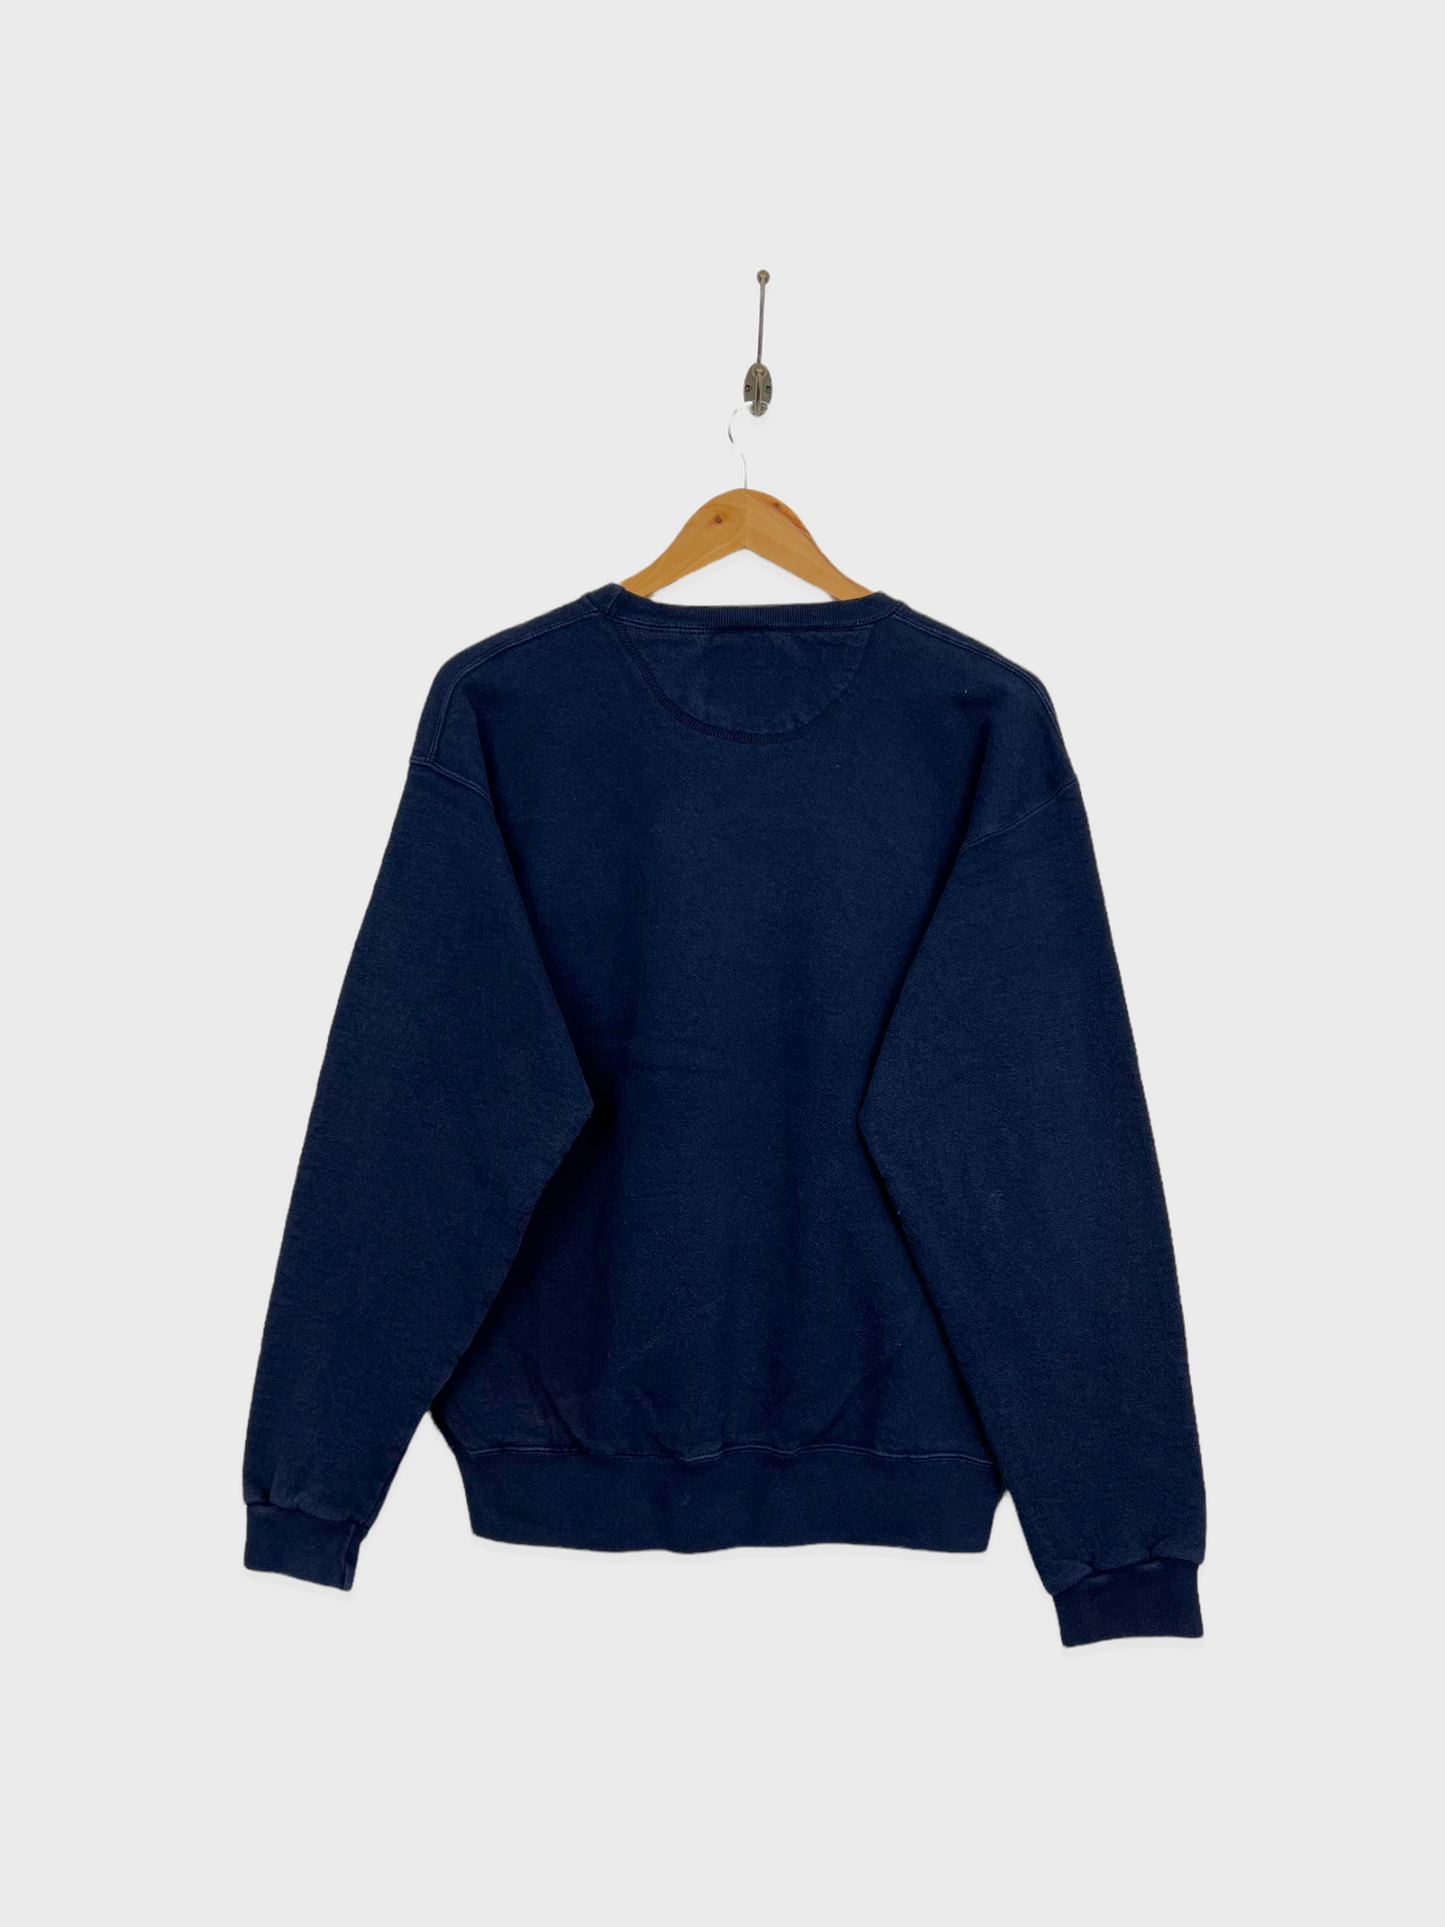 90's Georgia Tech USA Made Embroidered Vintage Sweatshirt Size 8